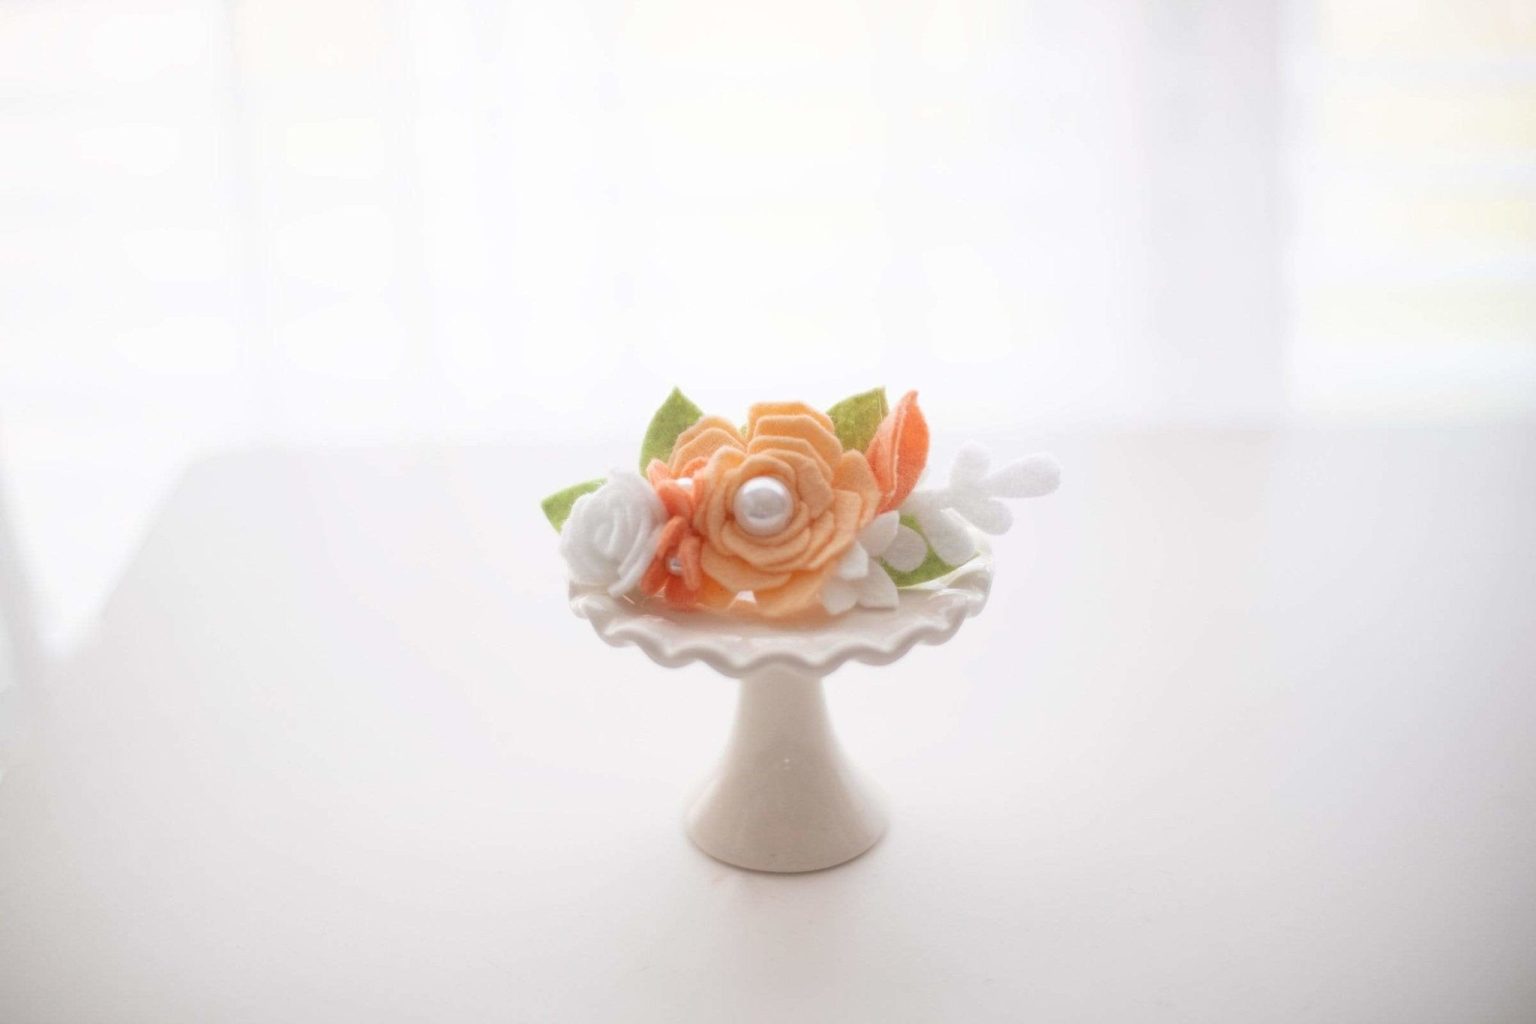 Apricot and White Felt Flower Headband - Kinder Kouture